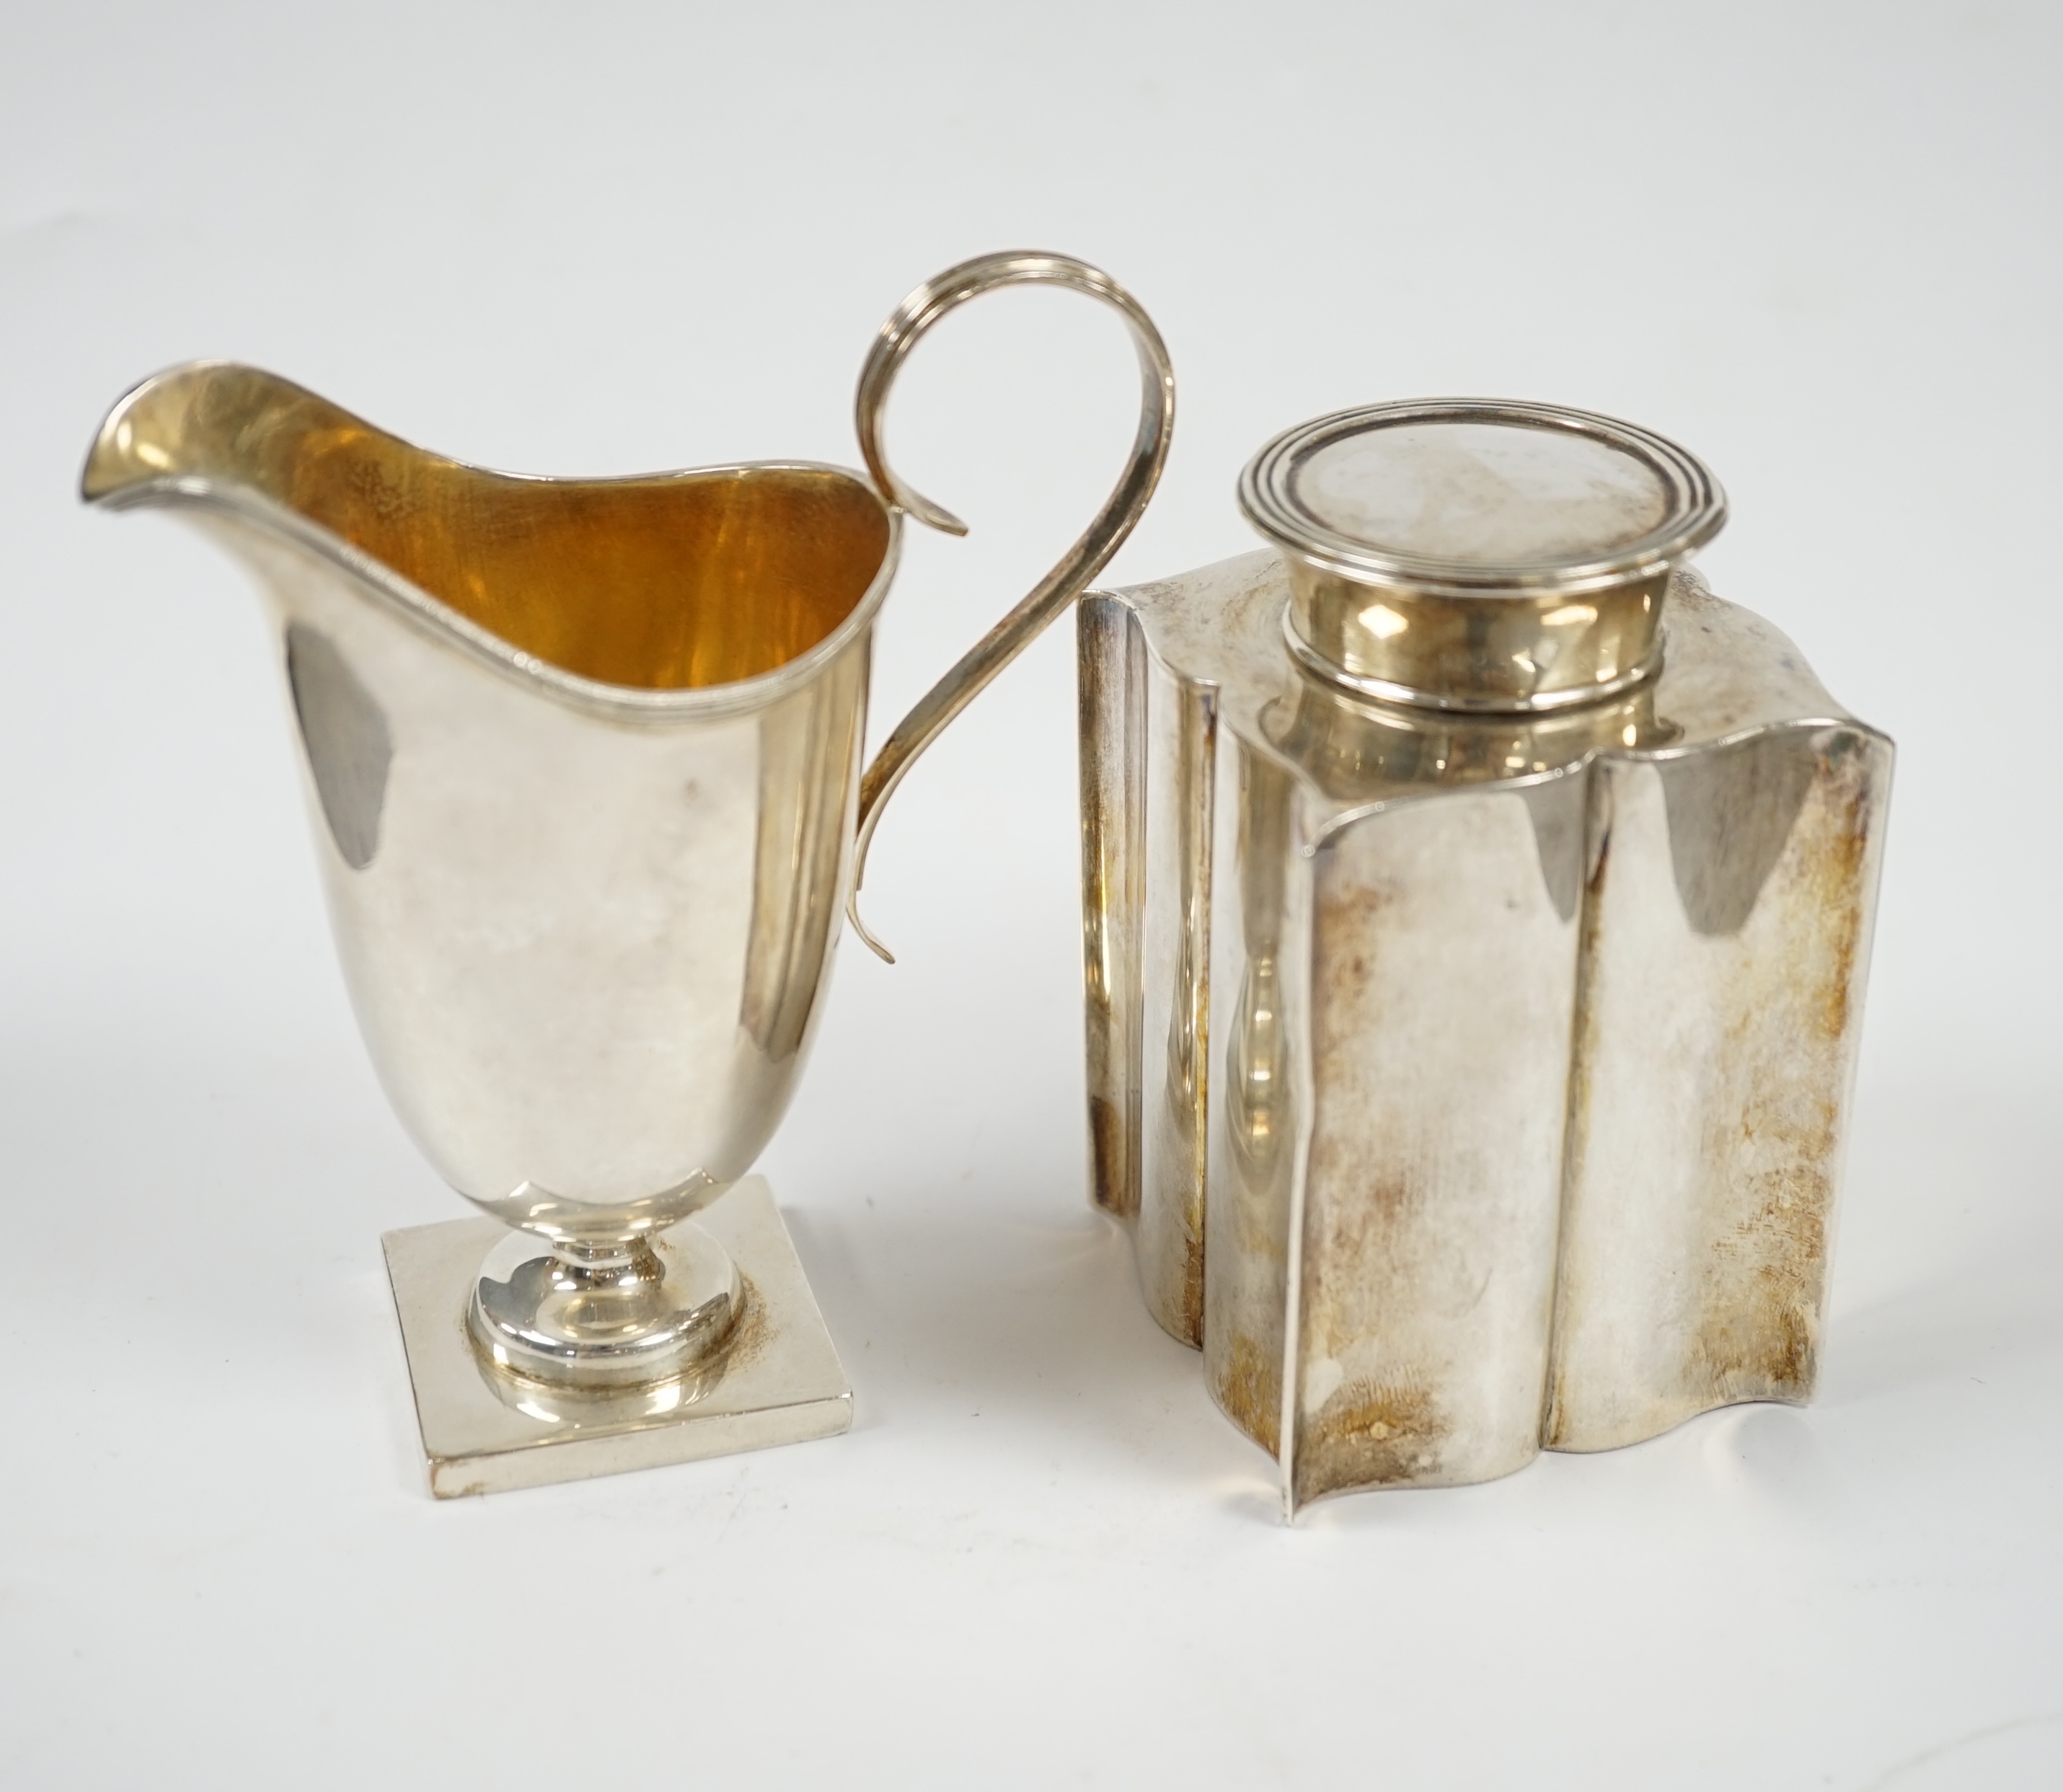 An Edwardian silver ‘bats wing’ tea caddy, Birmingham, 1906, 95mm and a George V silver cream jug. Condition - fair